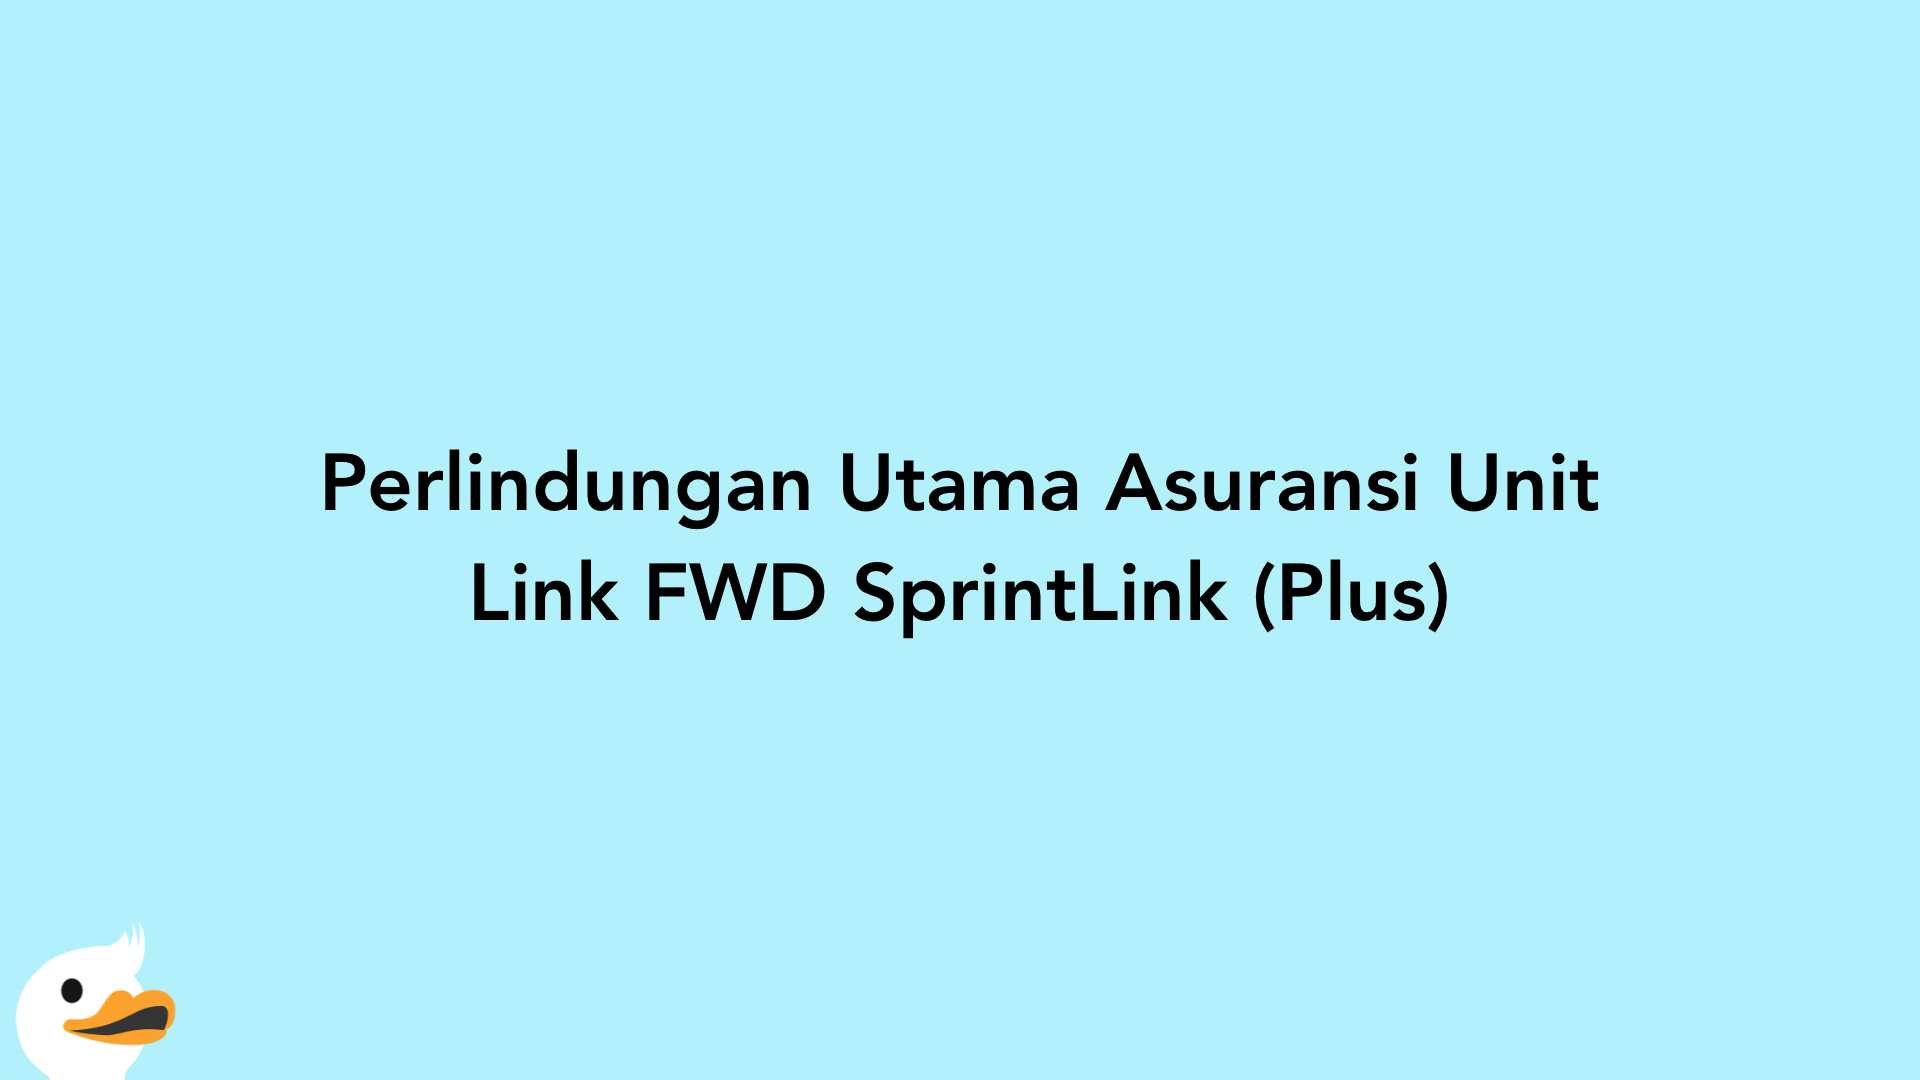 Perlindungan Utama Asuransi Unit Link FWD SprintLink (Plus)